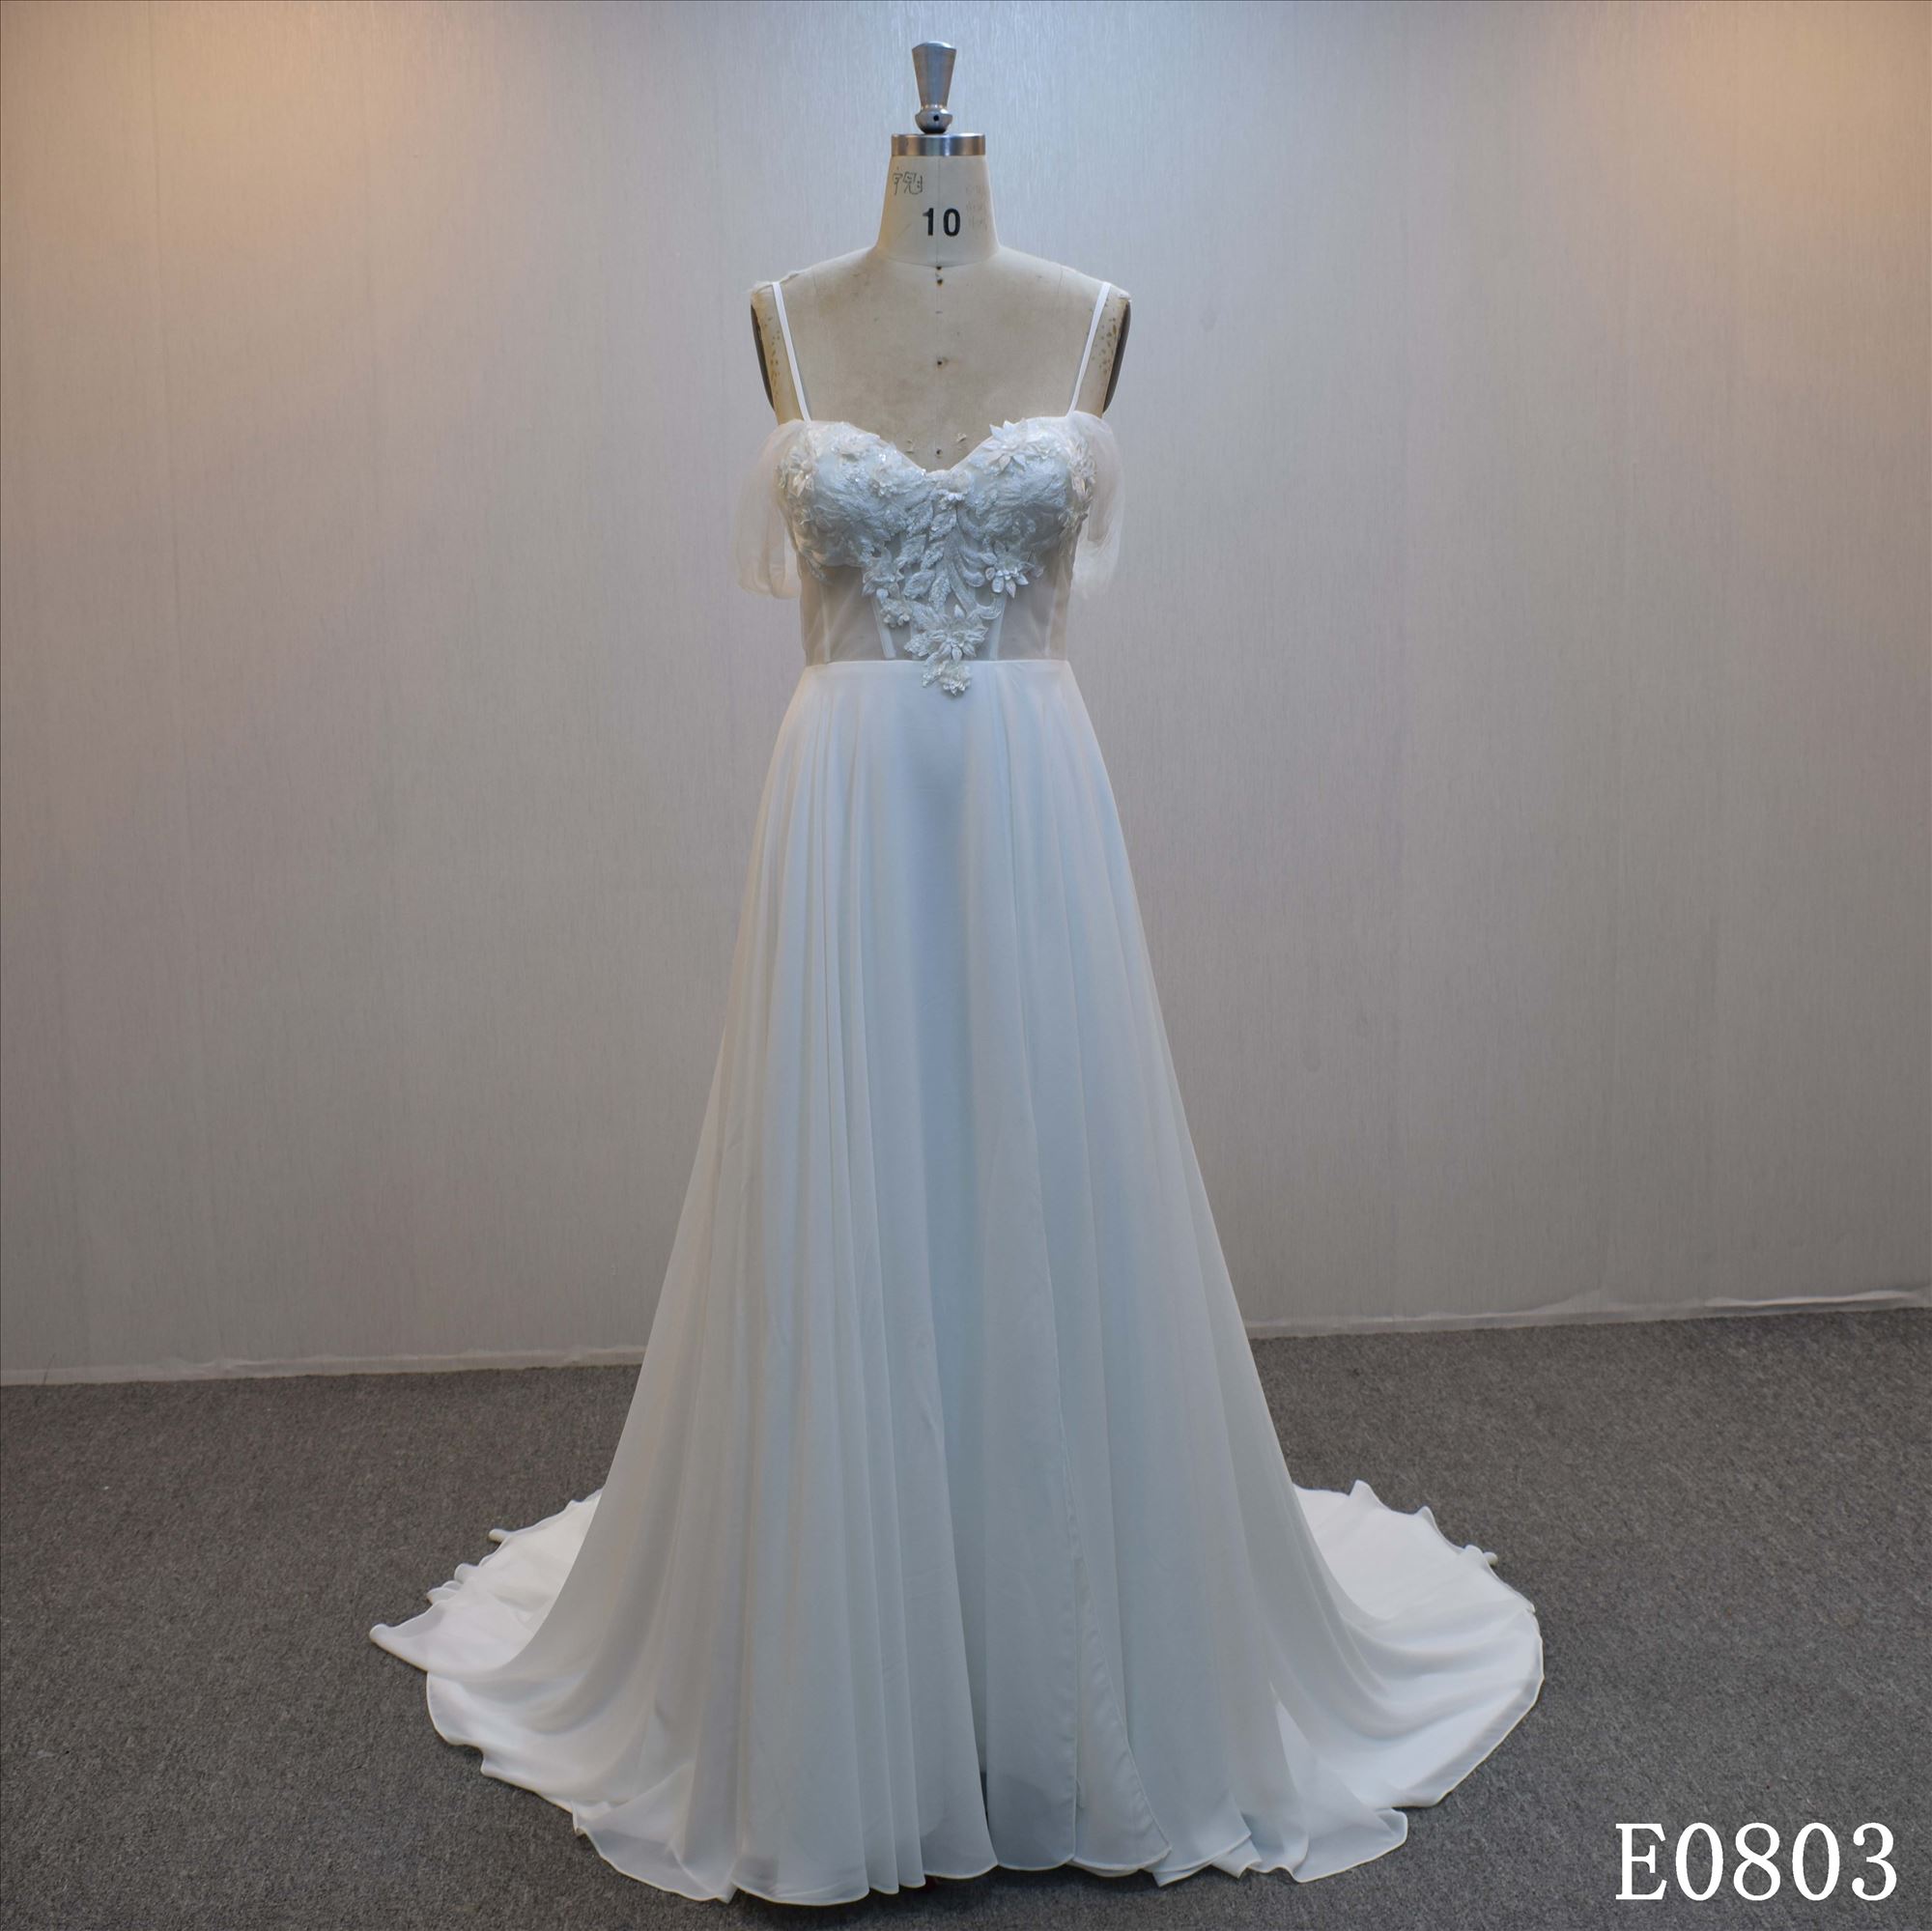 Guangzhou factory made simple chiffon bridal dress